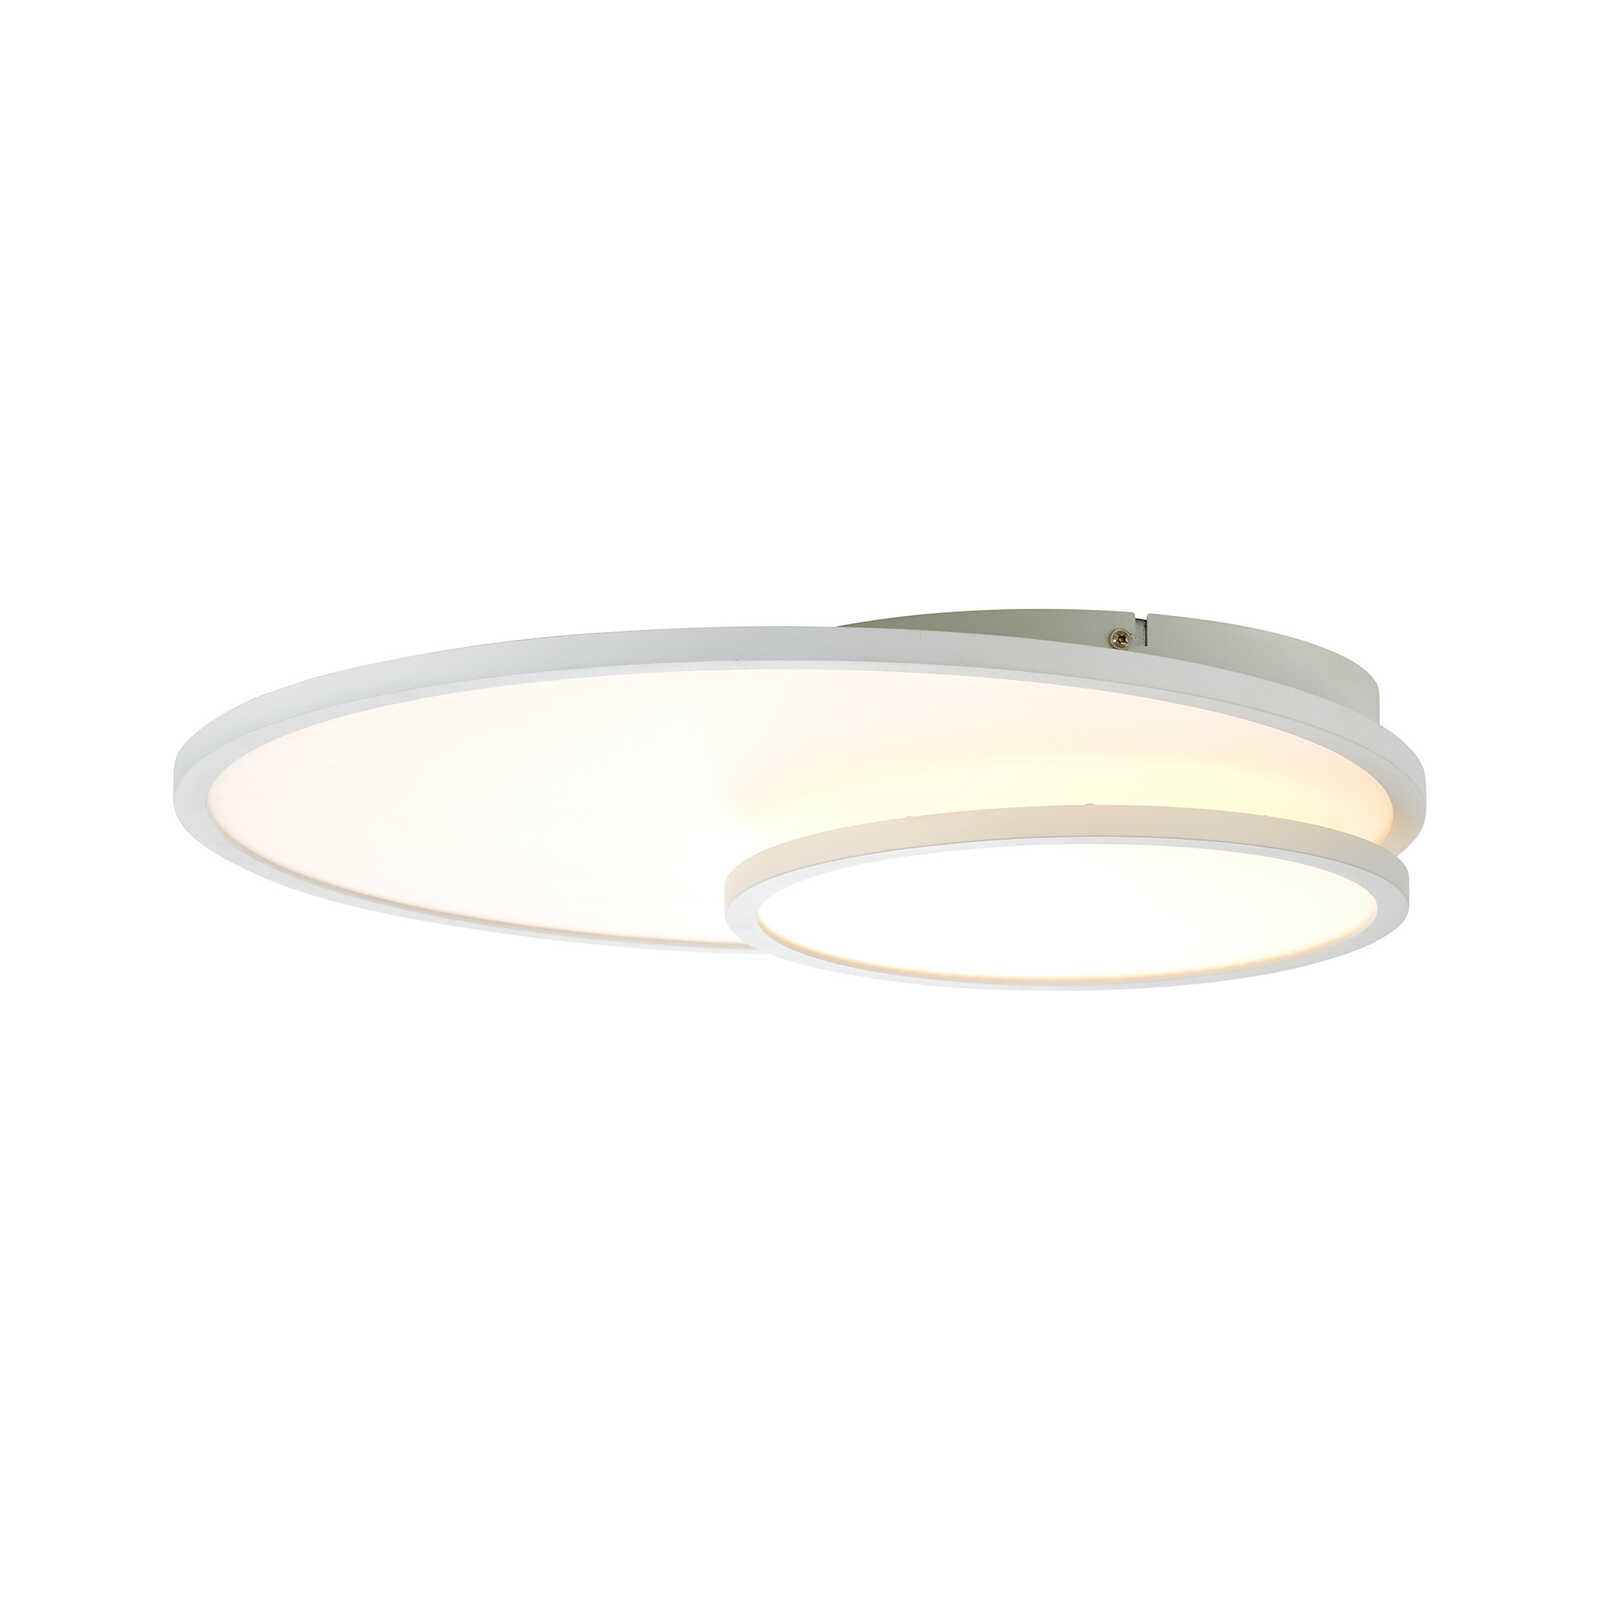 Metal ceiling light - Benno 2 - White
